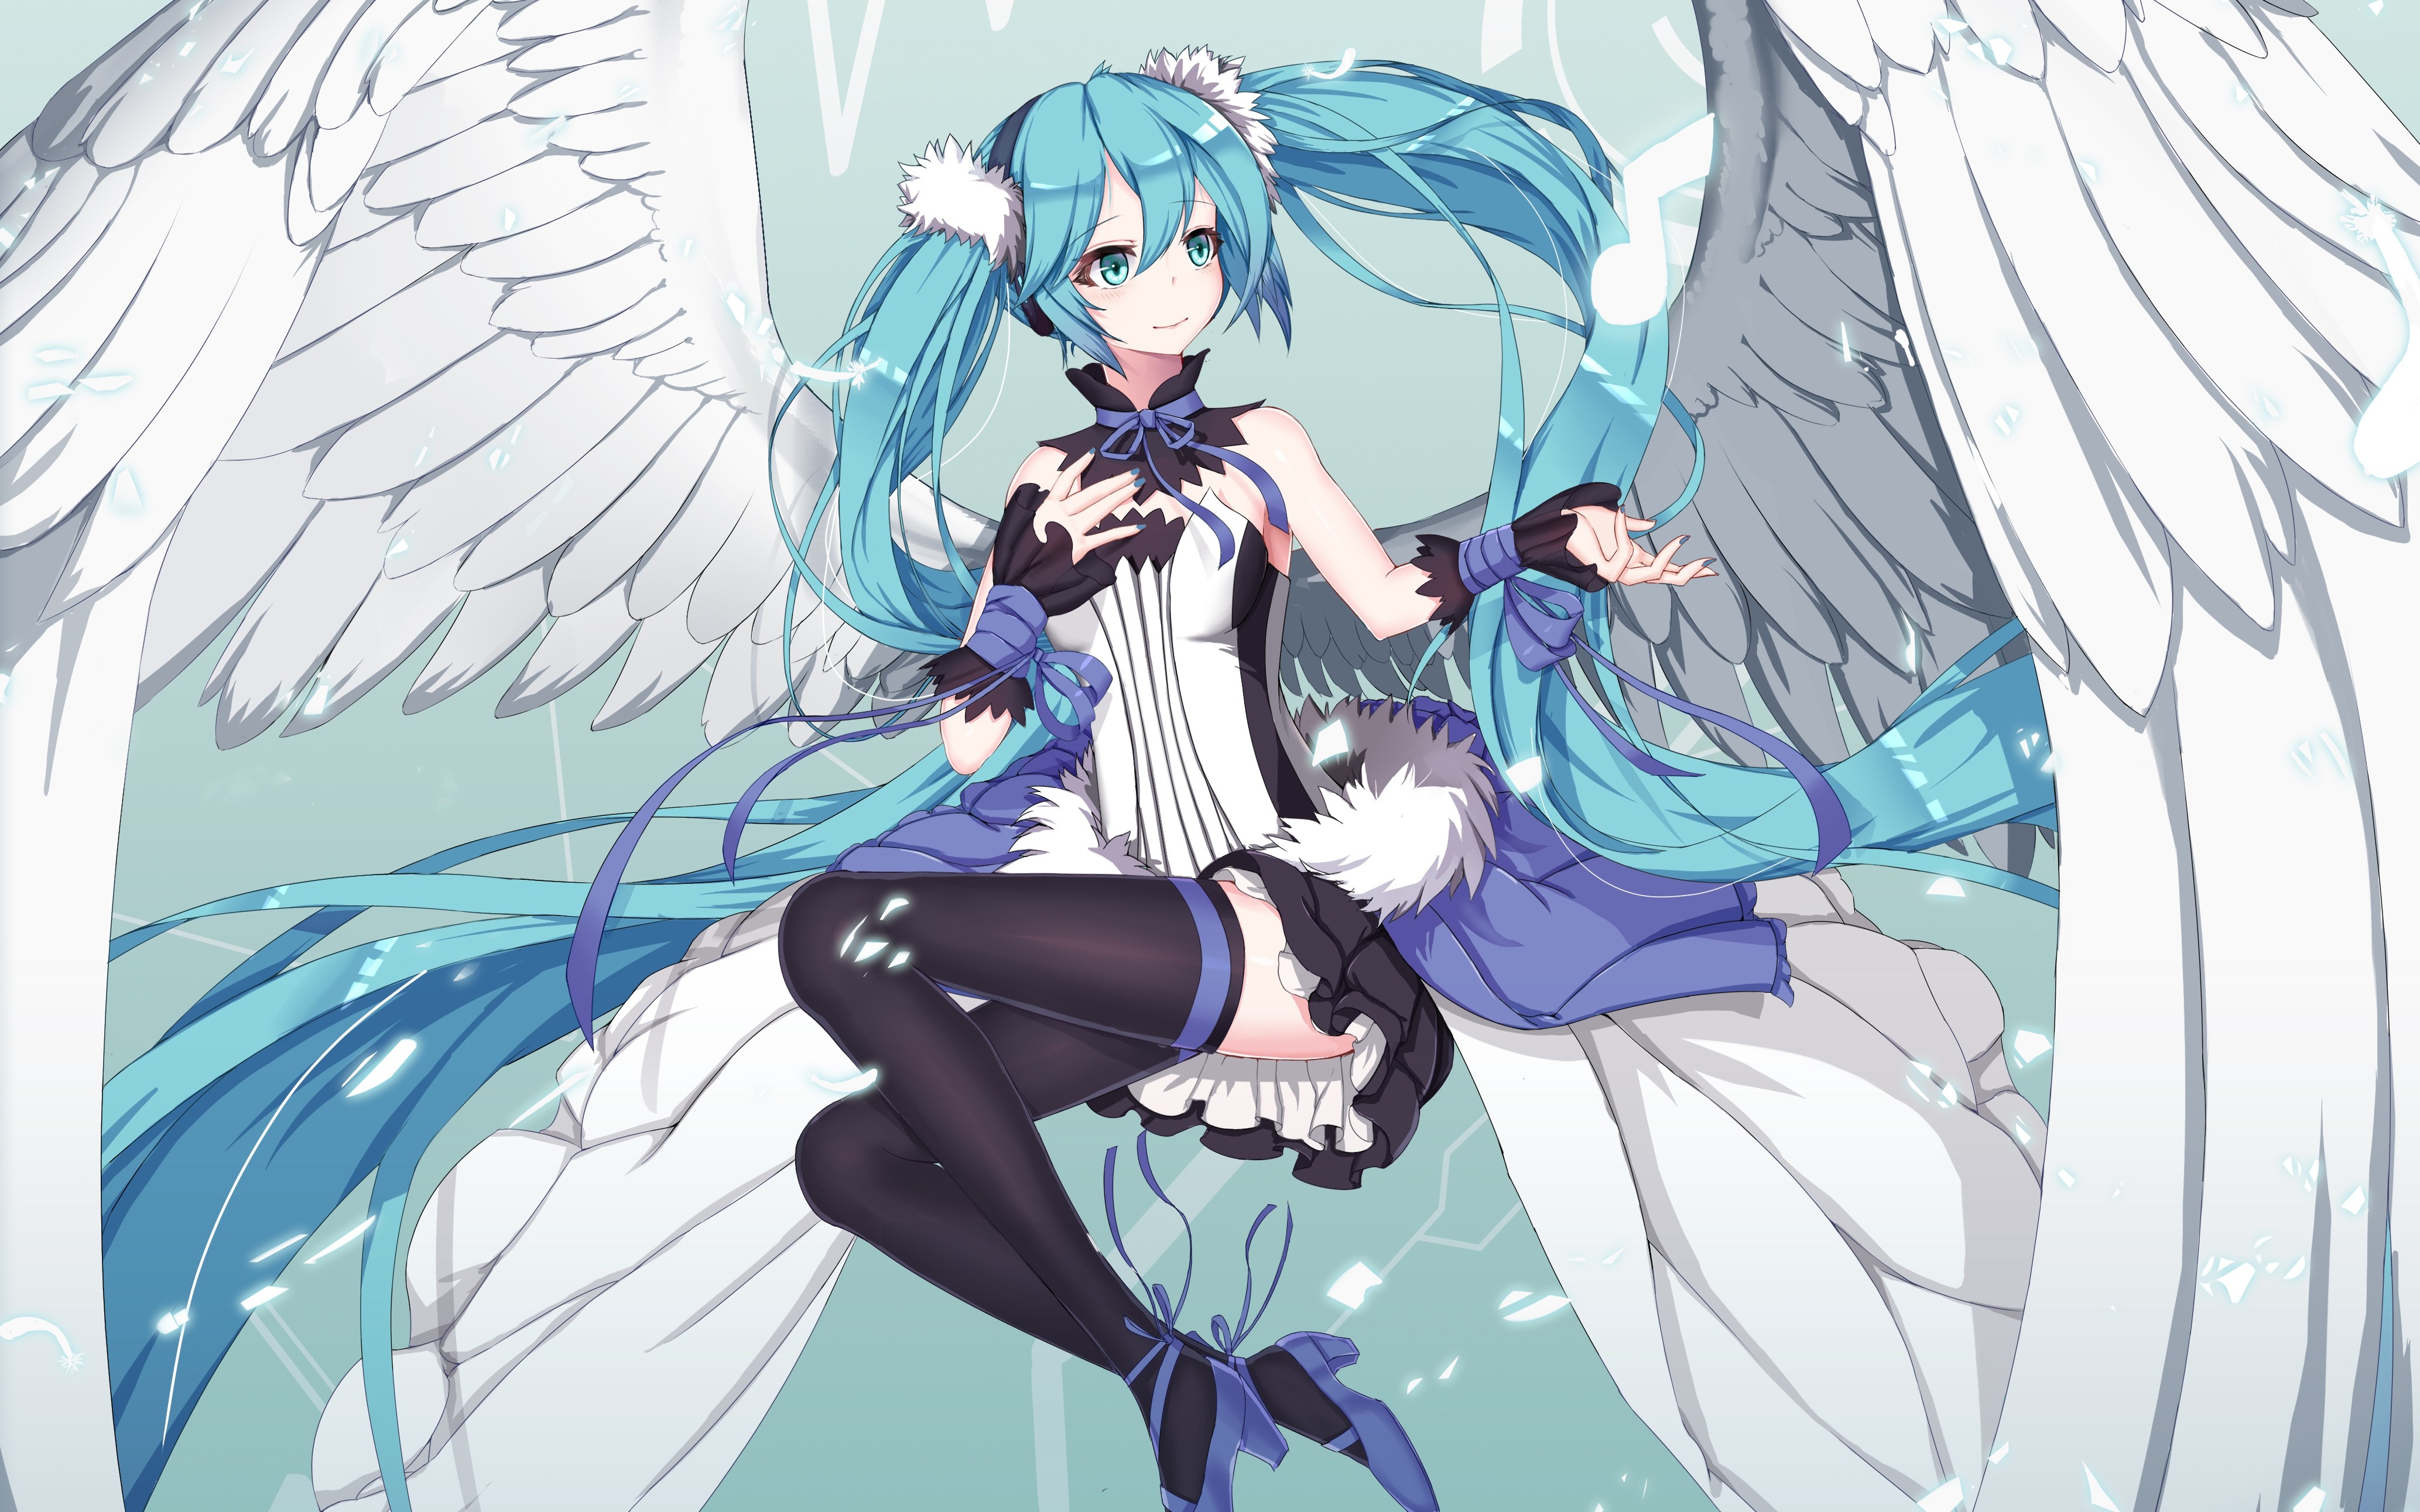 Anime 4133x2583 Hatsune Miku wings twintails angel Vocaloid stockings black stockings cyan hair long hair anime anime girls